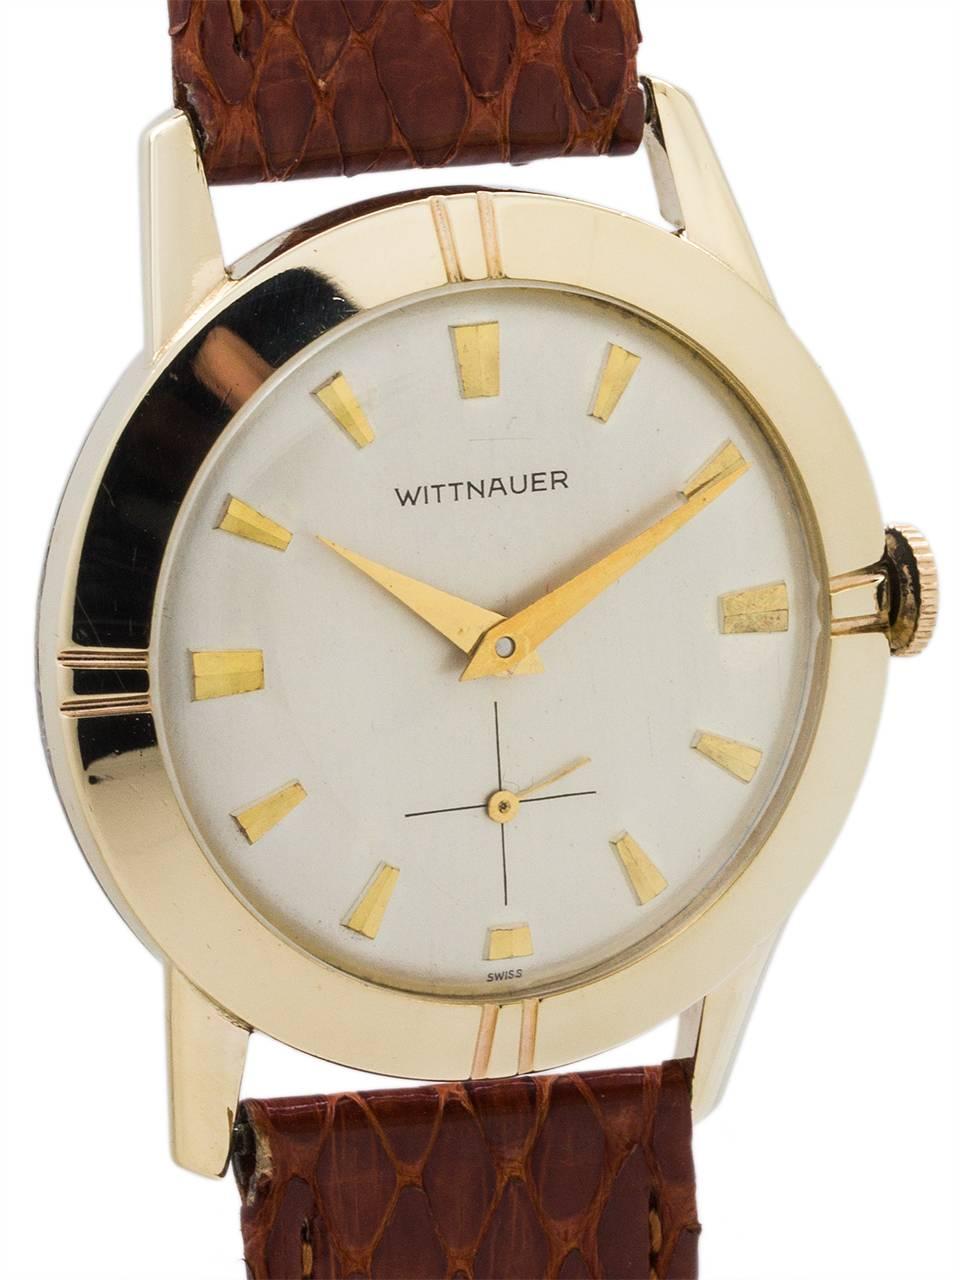 Modernist Wittnauer Yellow Gold Dress Model Manual Wind Wristwatch, circa 1950s